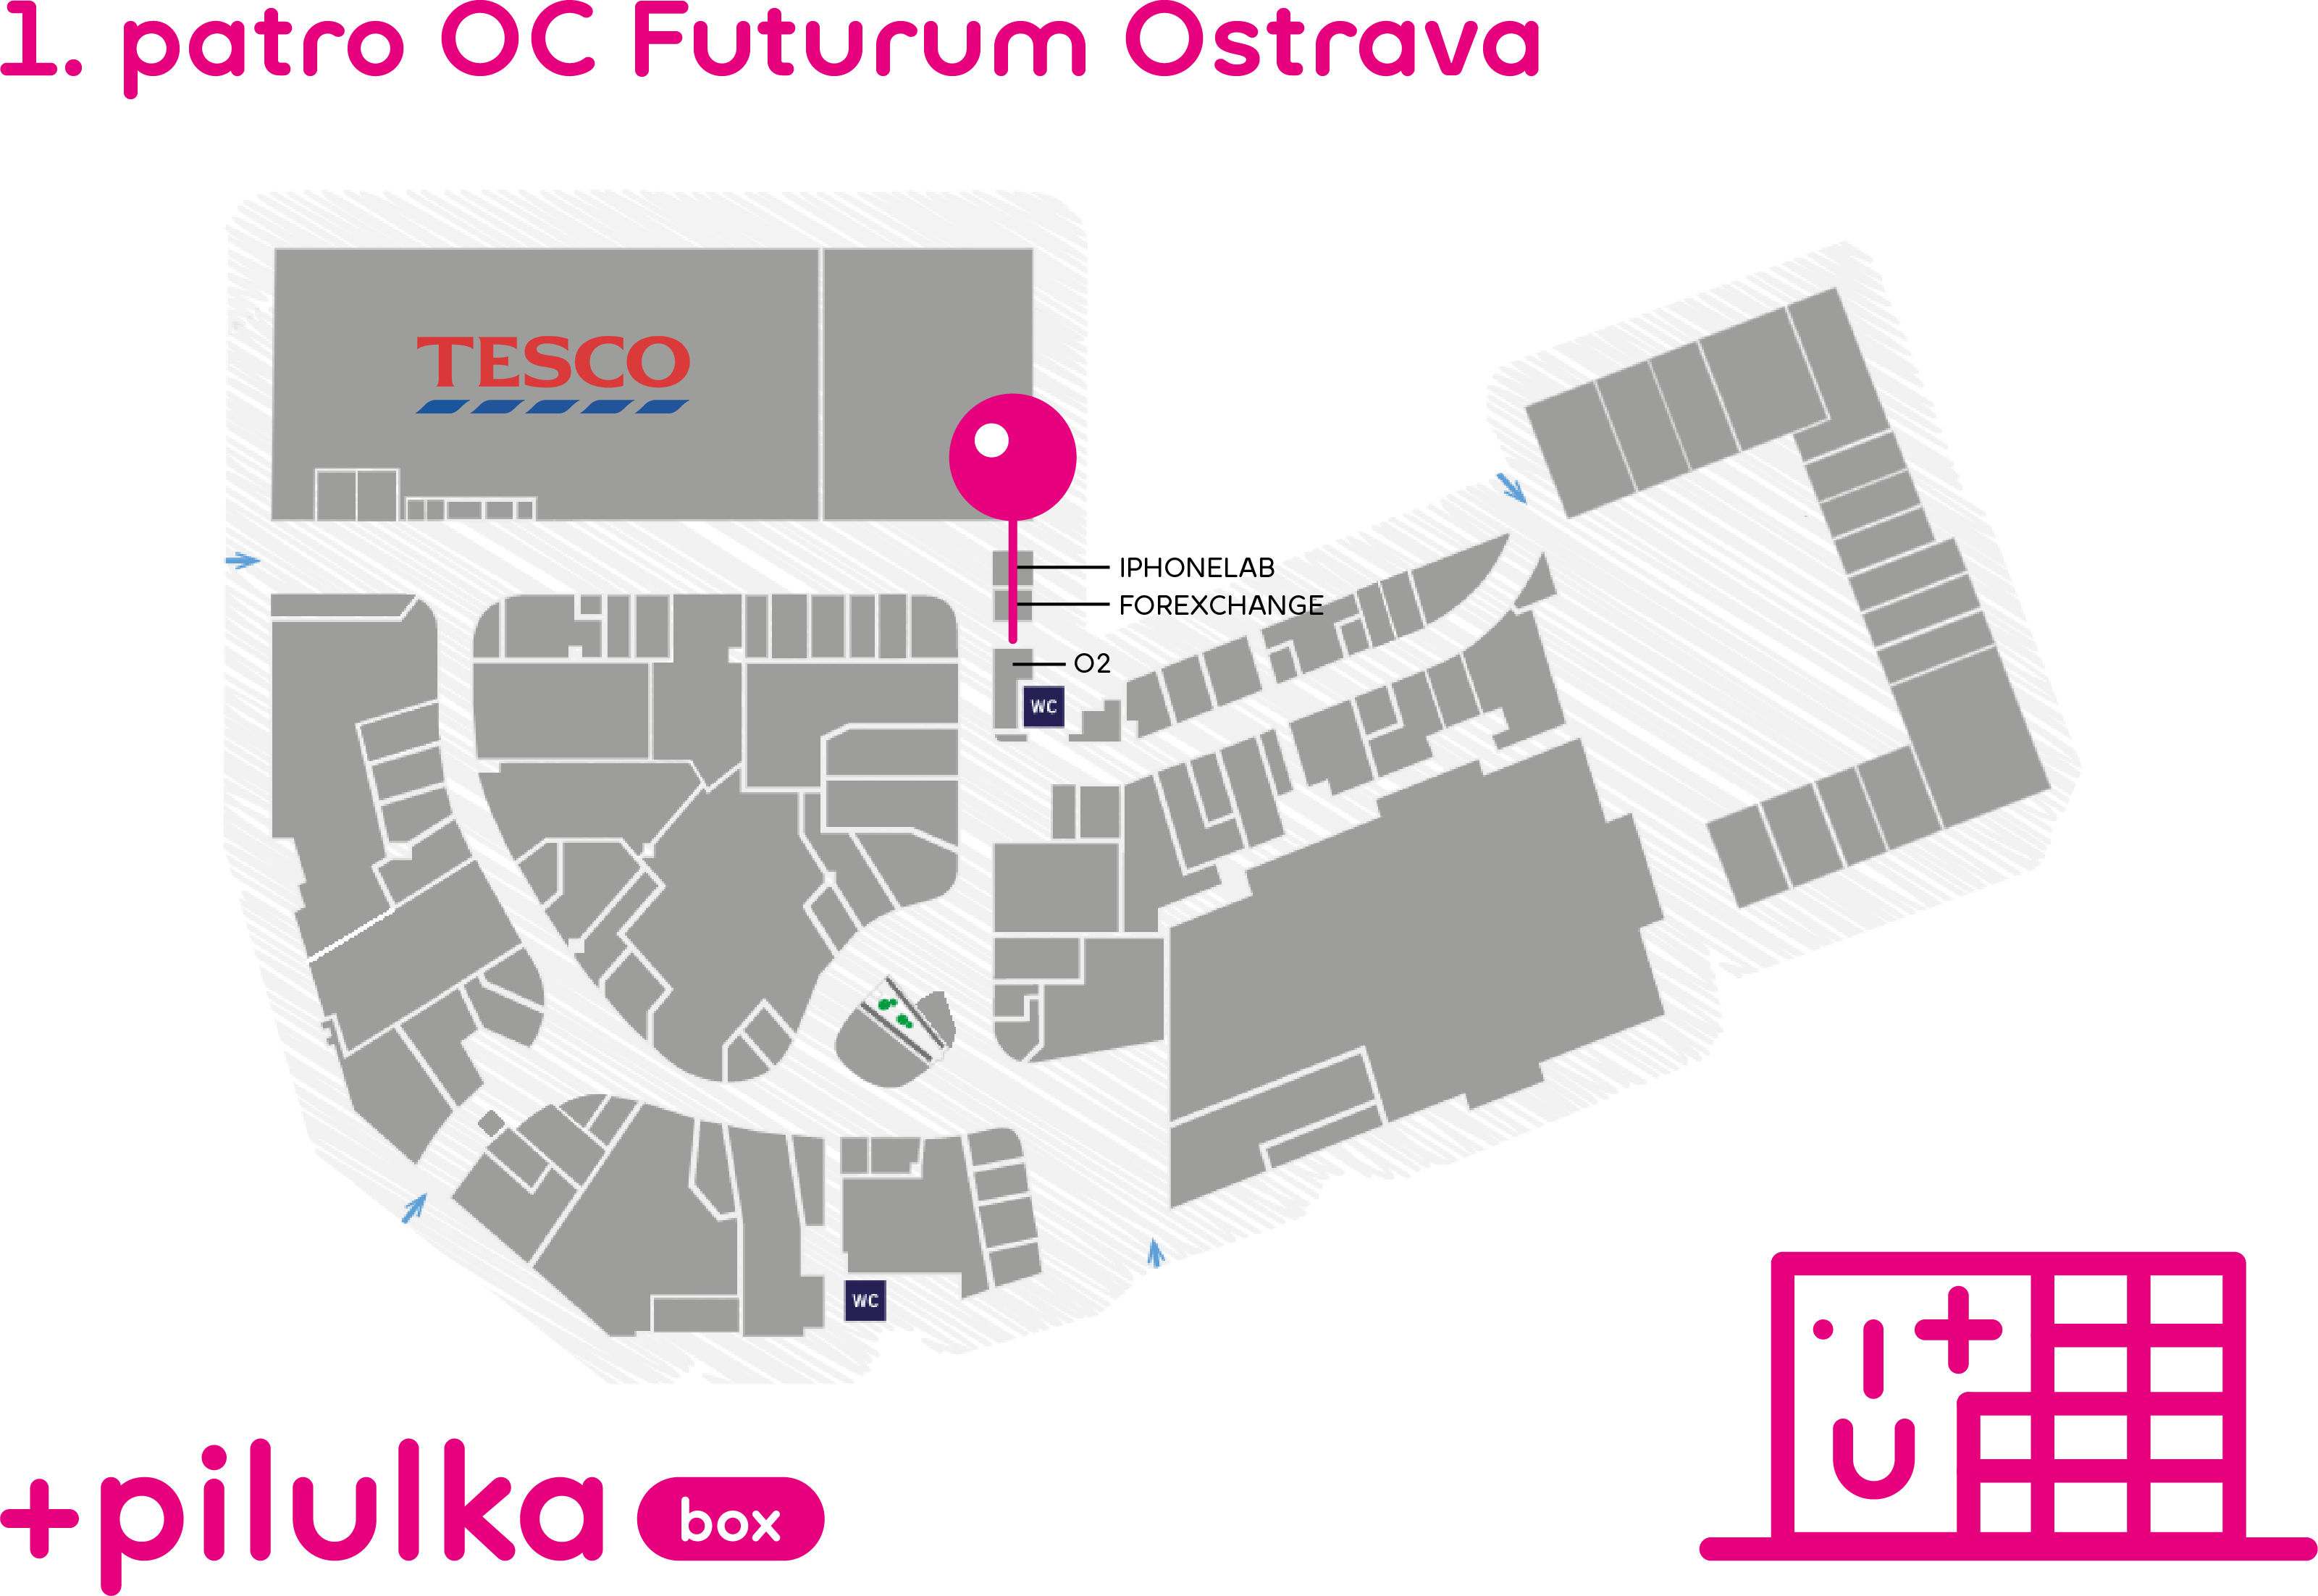 Pilulka-box_OC-Futurum-Ostrava (3)_Pilulka_box_OC Futurum Ostrava (2).png